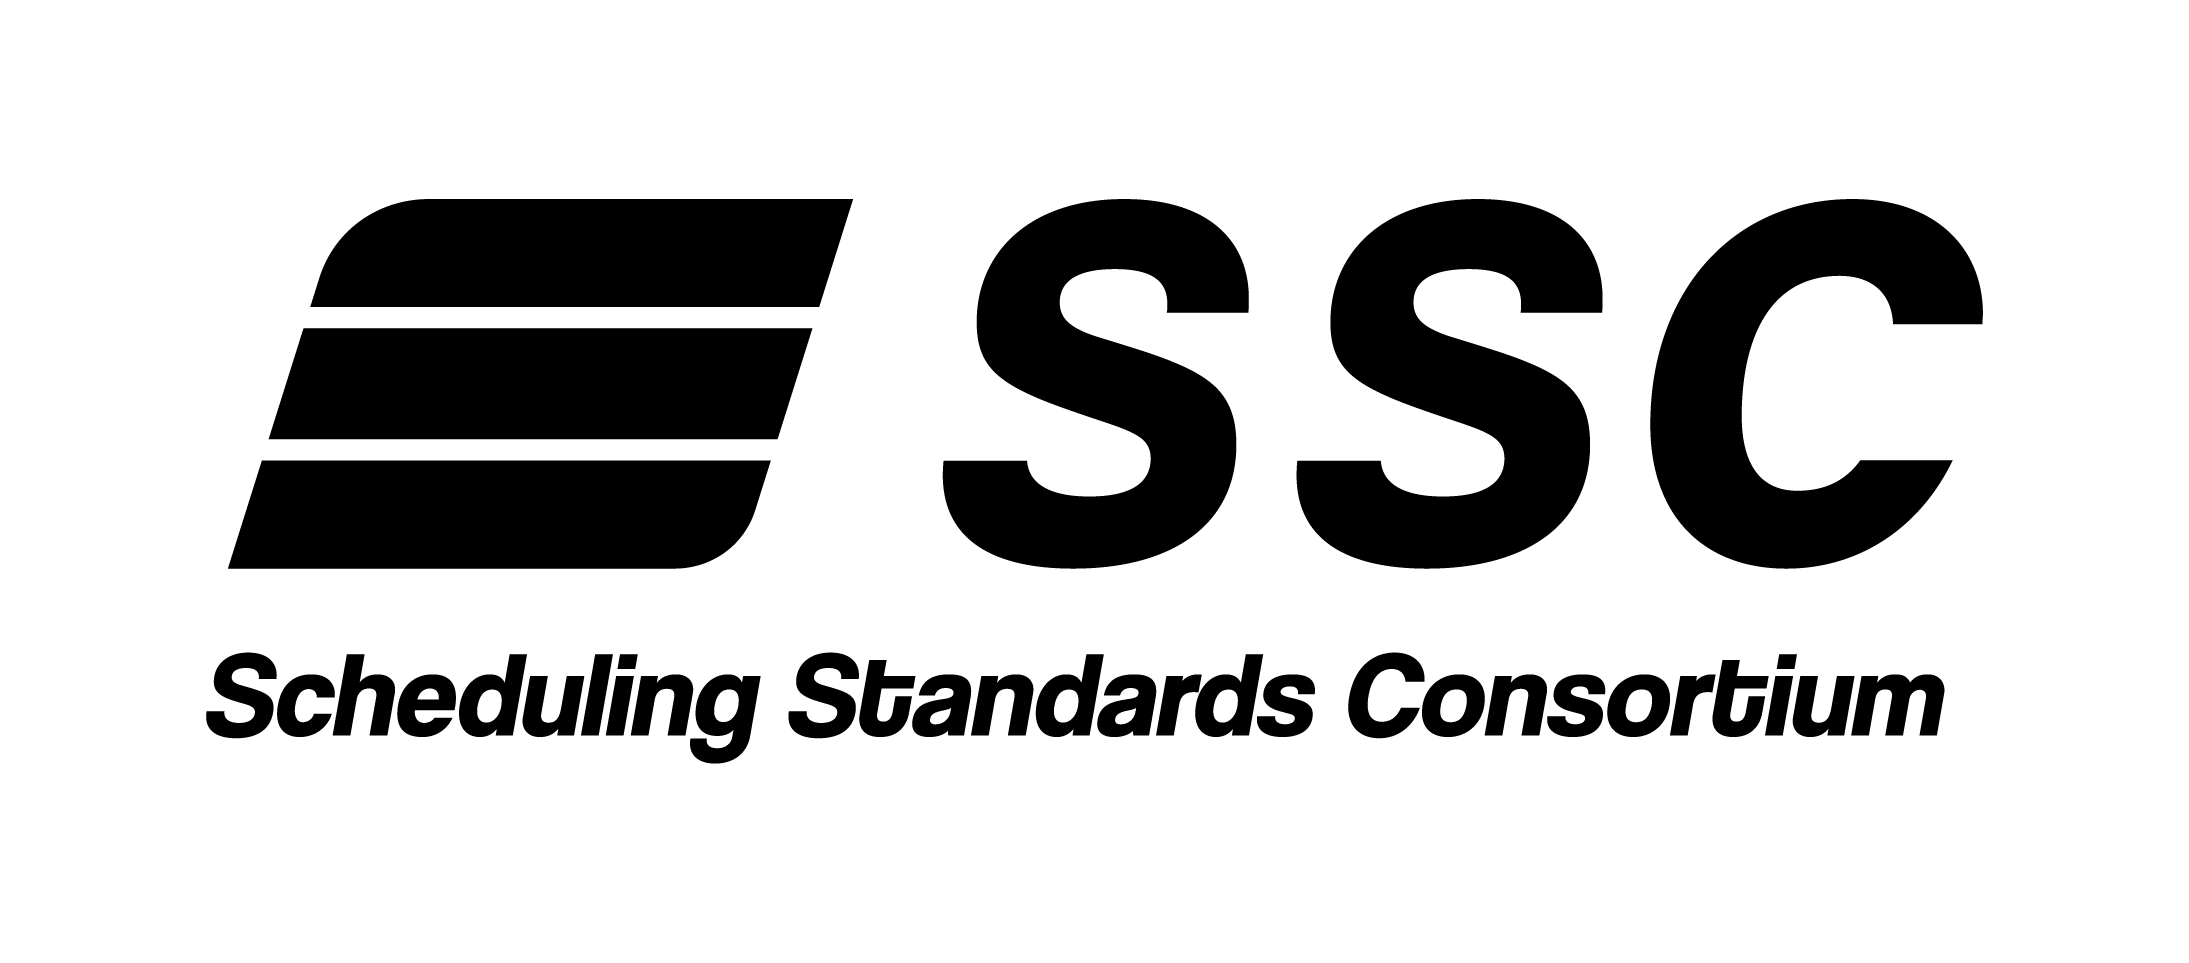 ssc logo black